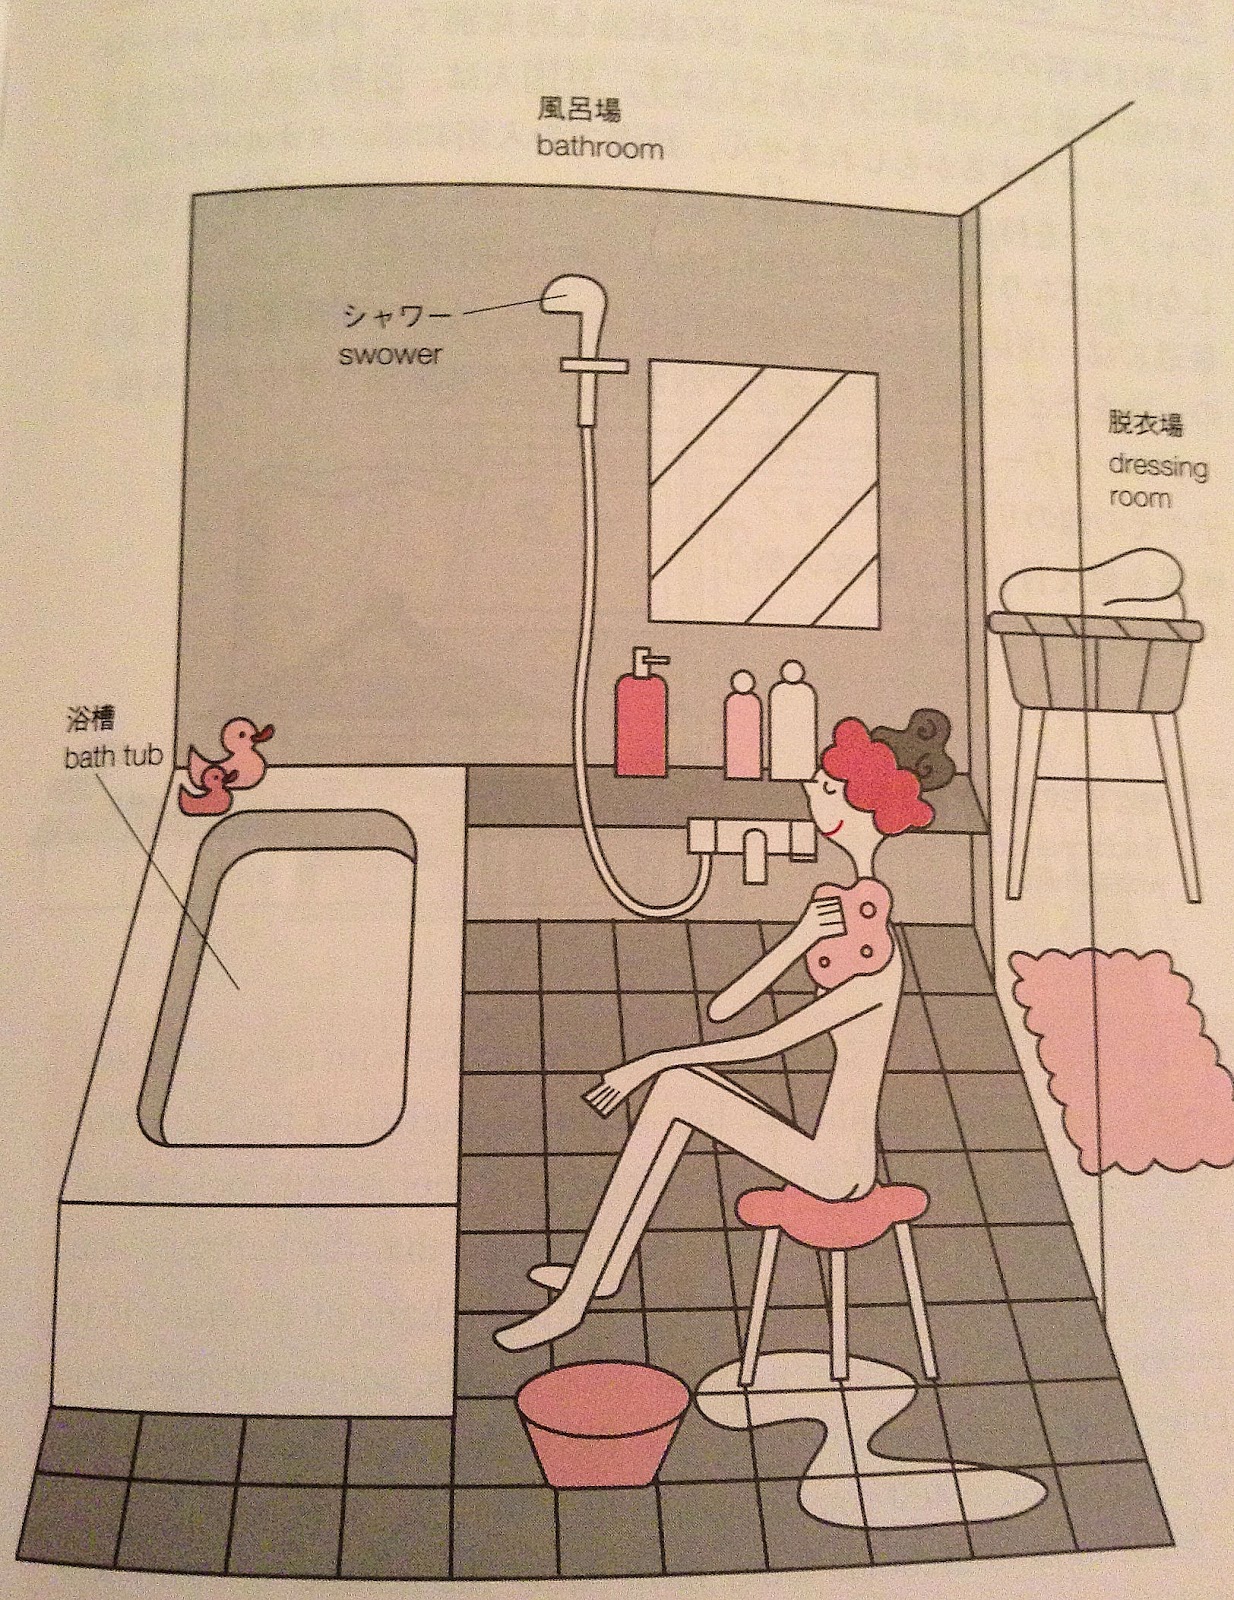 Japan's Heart and Culture: Japanese’s bath customs